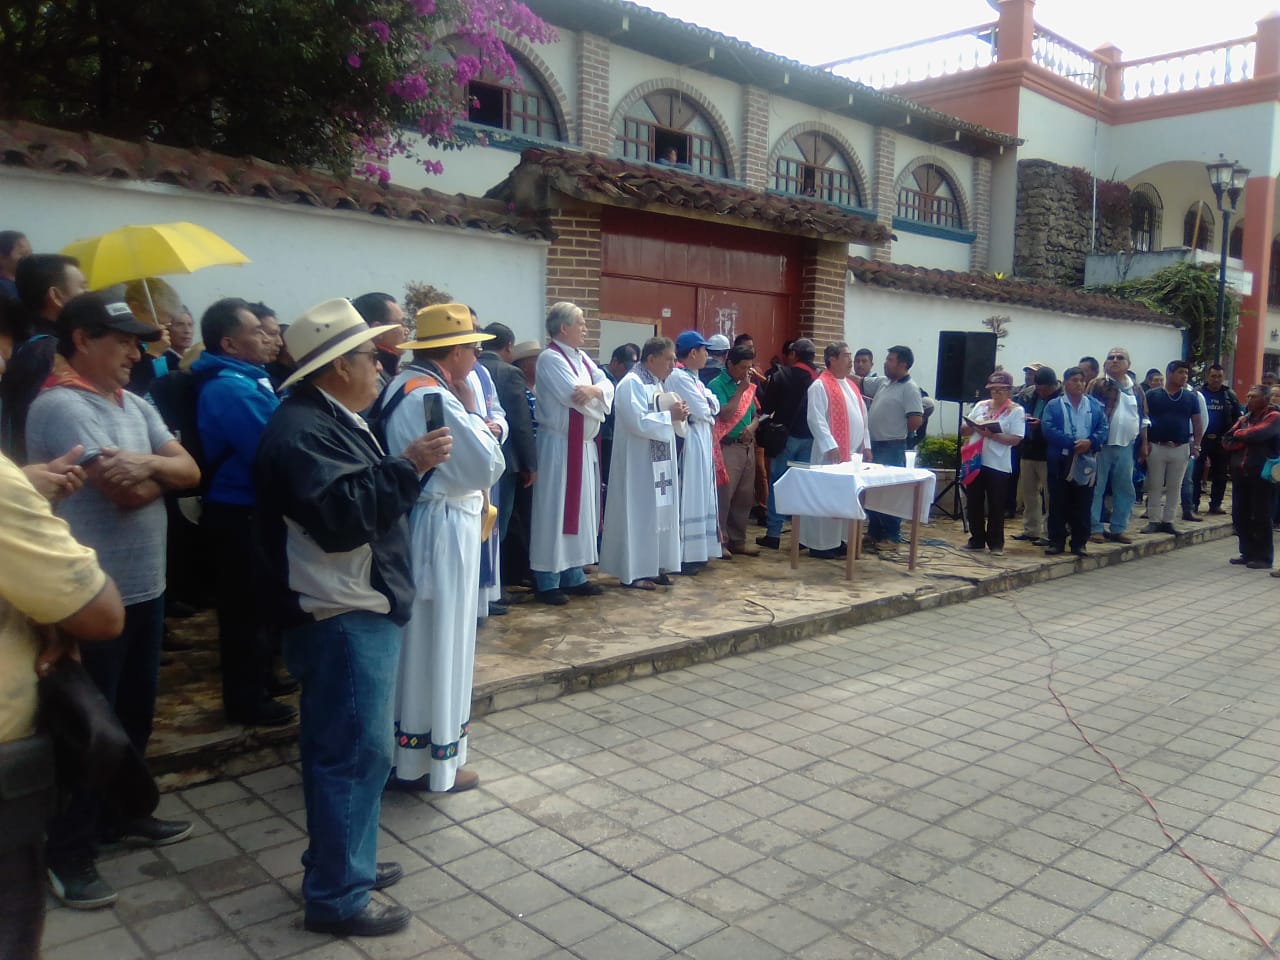 Peregrinan para exigir aparición con vida Diócesis de San Cristóbal de las  Casas tras 7 días de retención | Chiapasparalelo